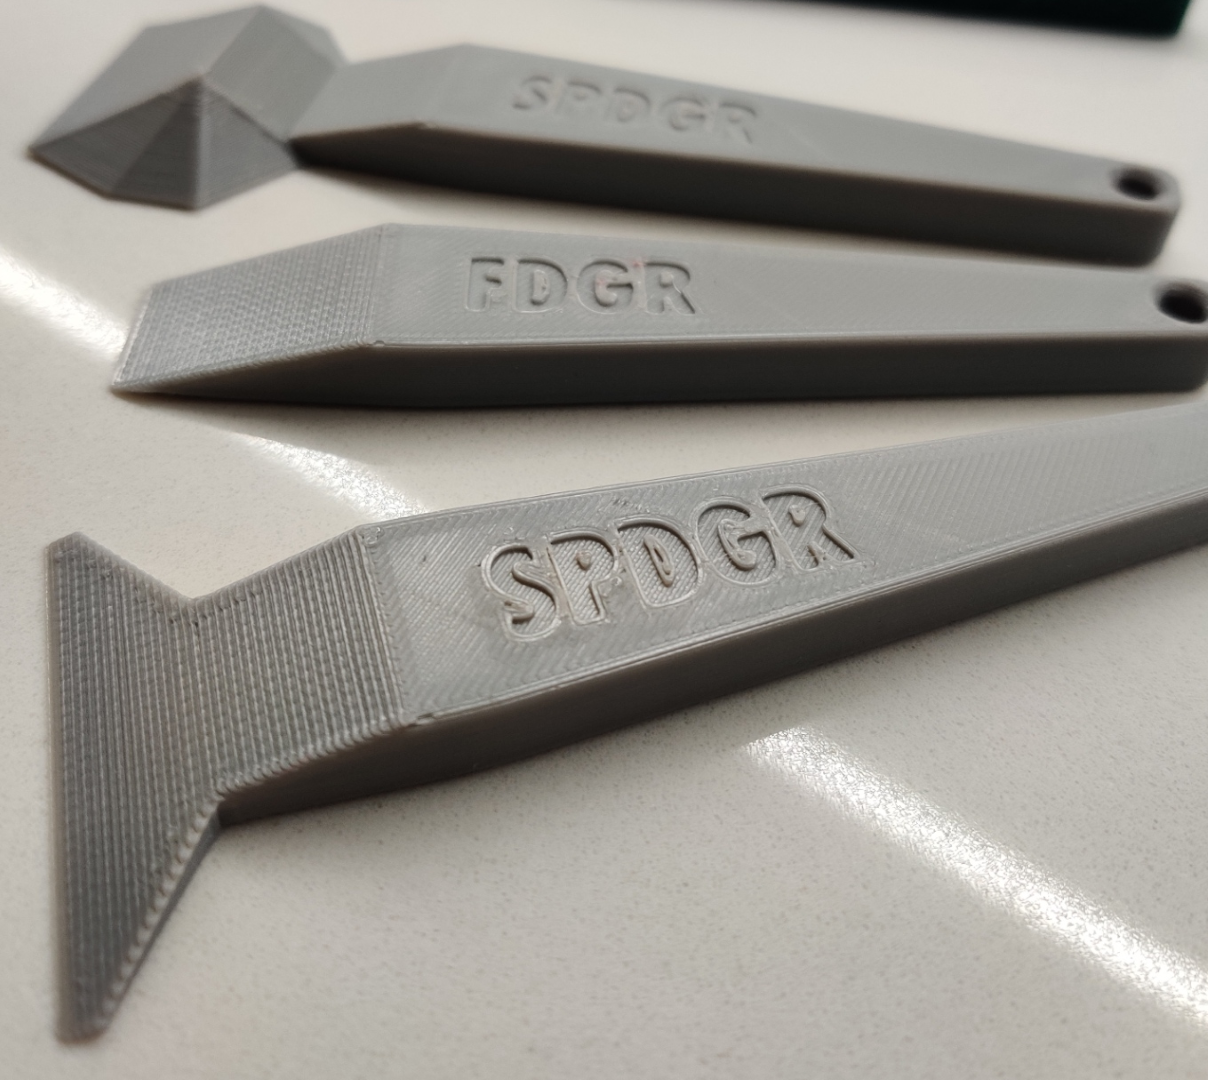 Ergonomic SPDGR / SCRPR / FDGR Bed Cutter - 3D Printing Tools